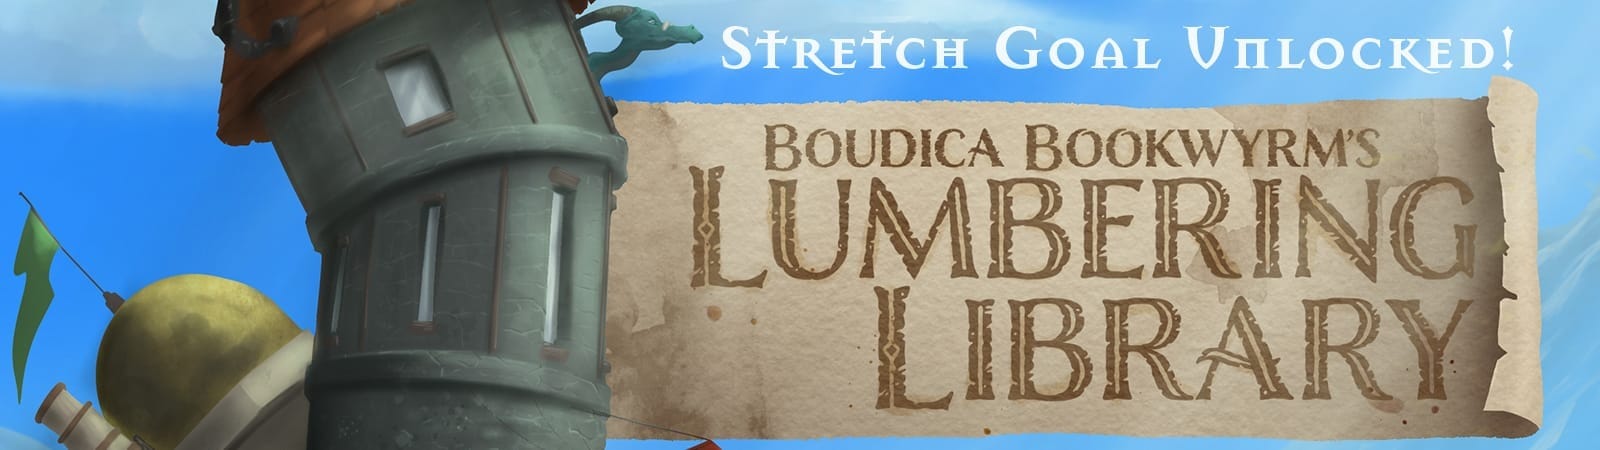 Title: Boudica Bookwyrm's Lumbering Library. Supertext: Stretch Goal Unlocked.